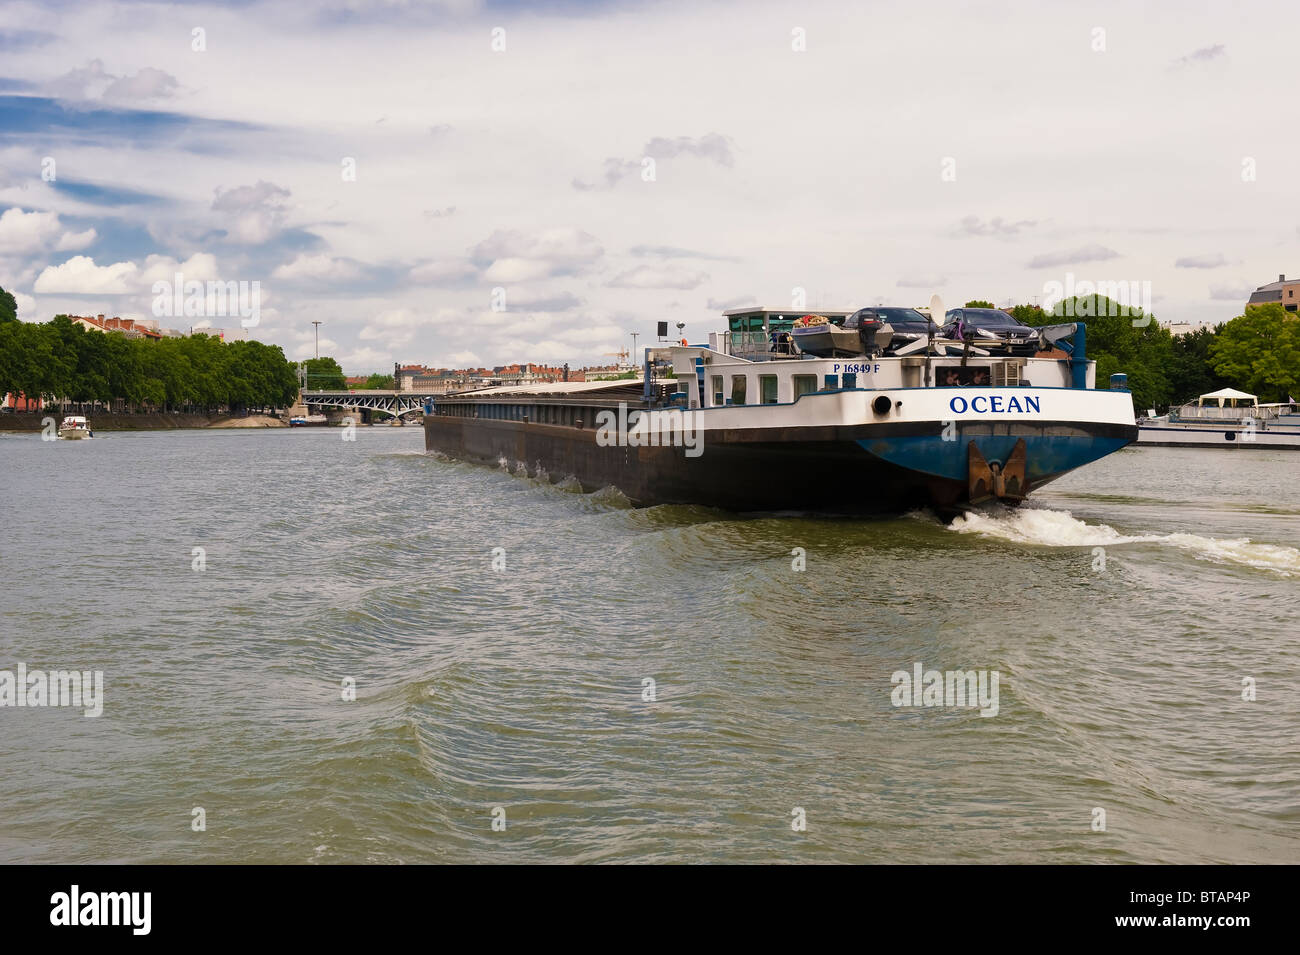 Barge navigating on the Saone river, Lyon, France Stock Photo